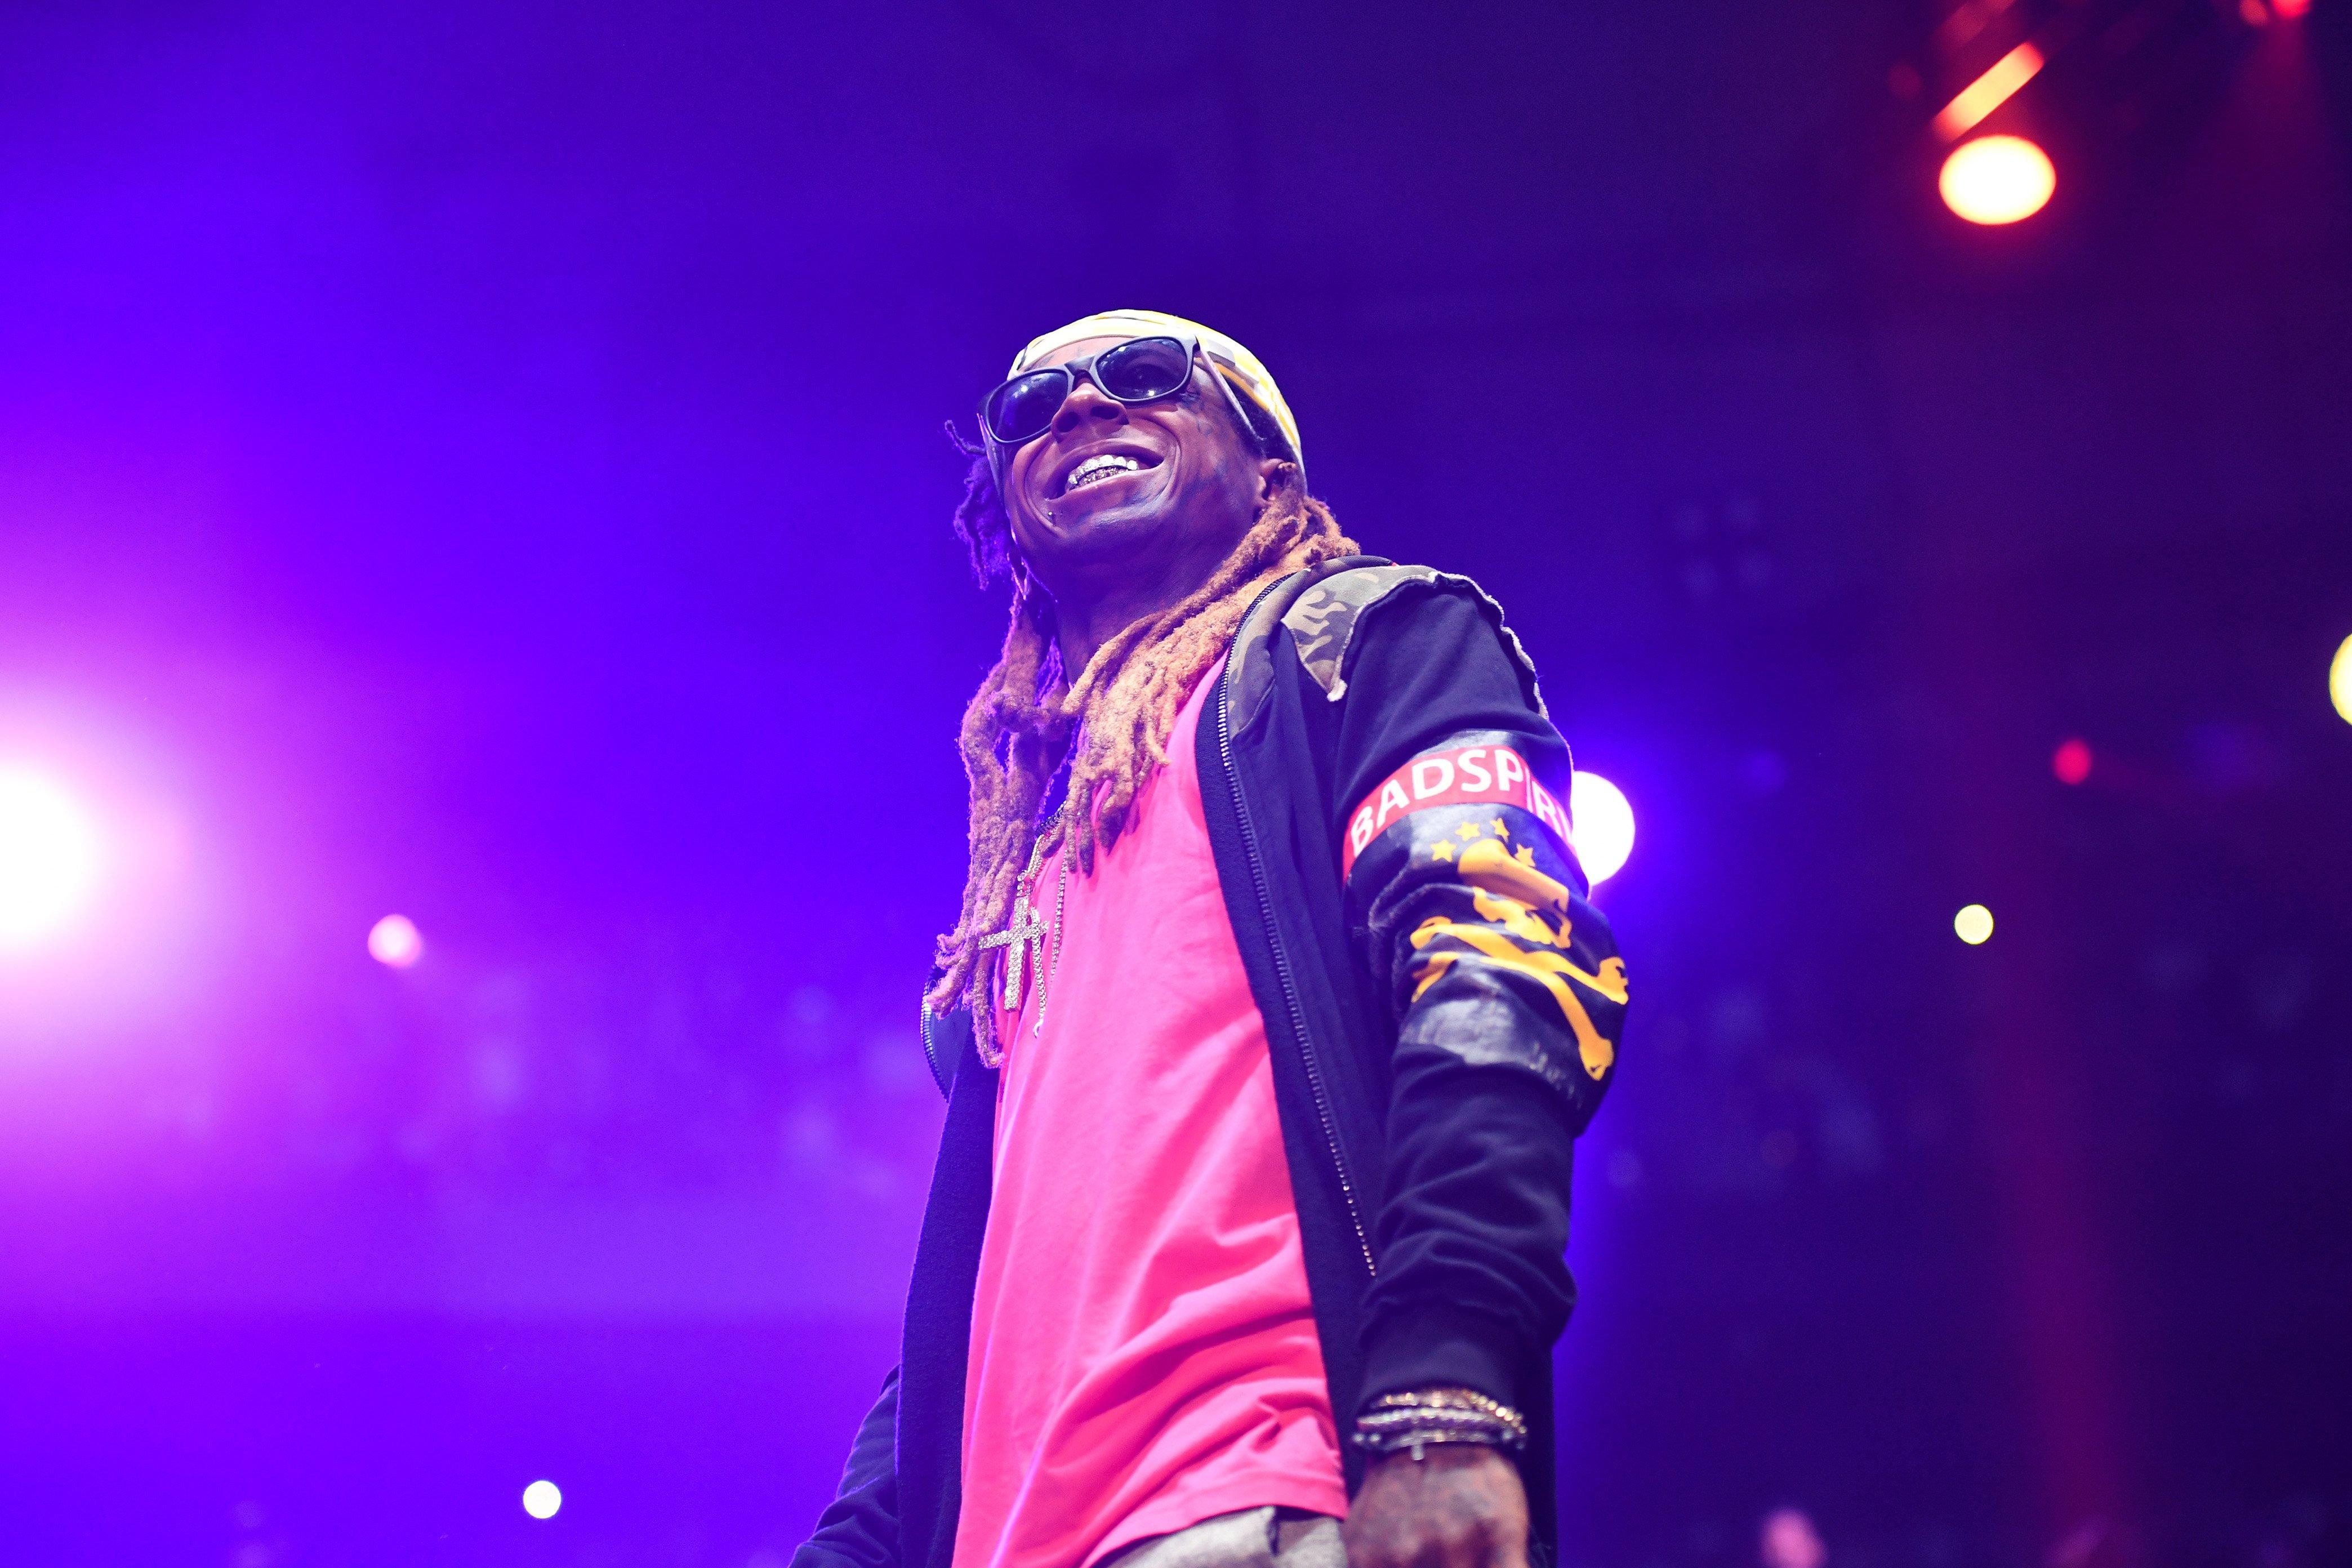 Lil Wayne on stage in 2017